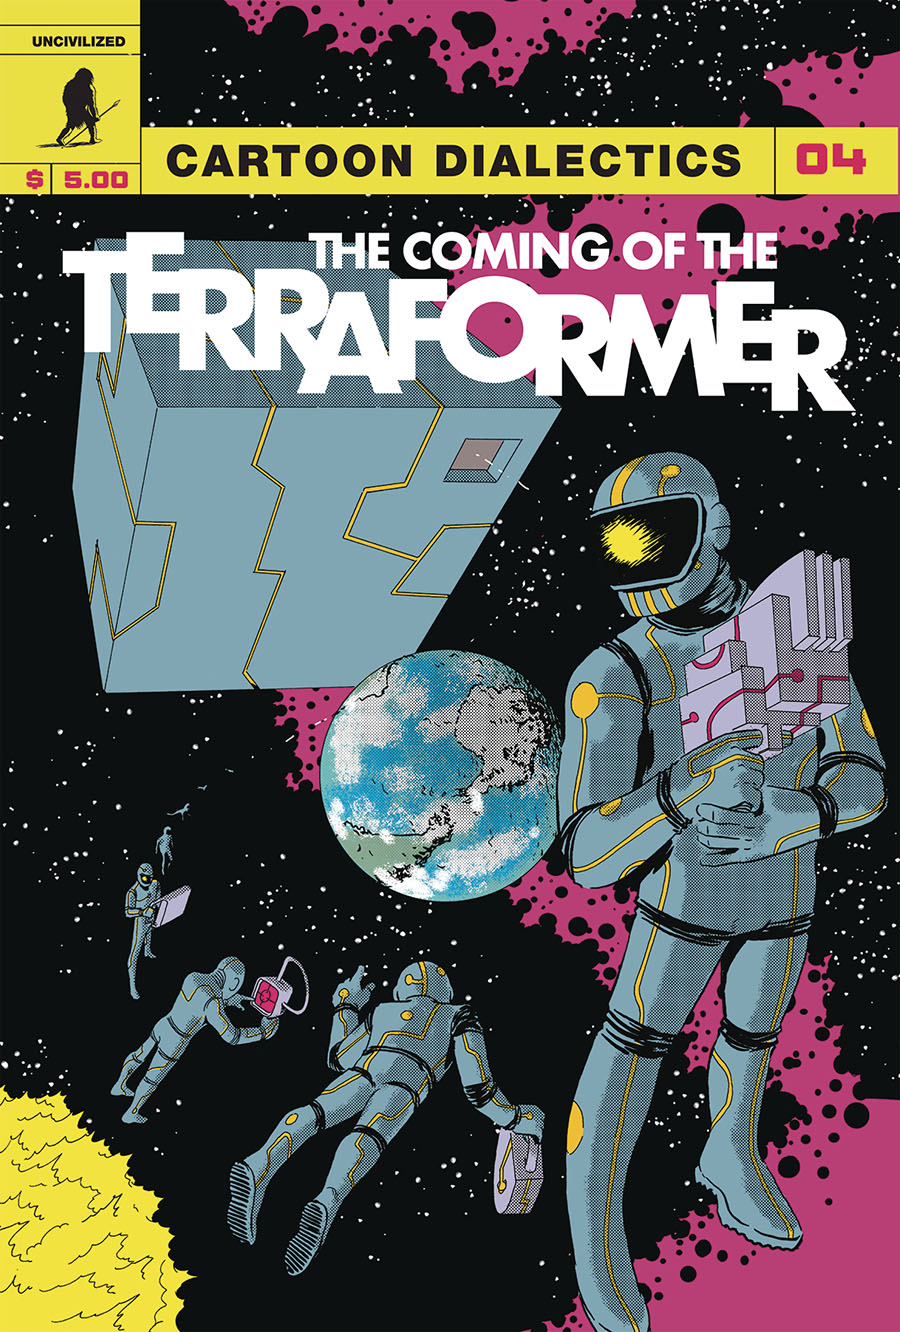 Cartoon Dialectics #4 The Coming Of The Terraformer